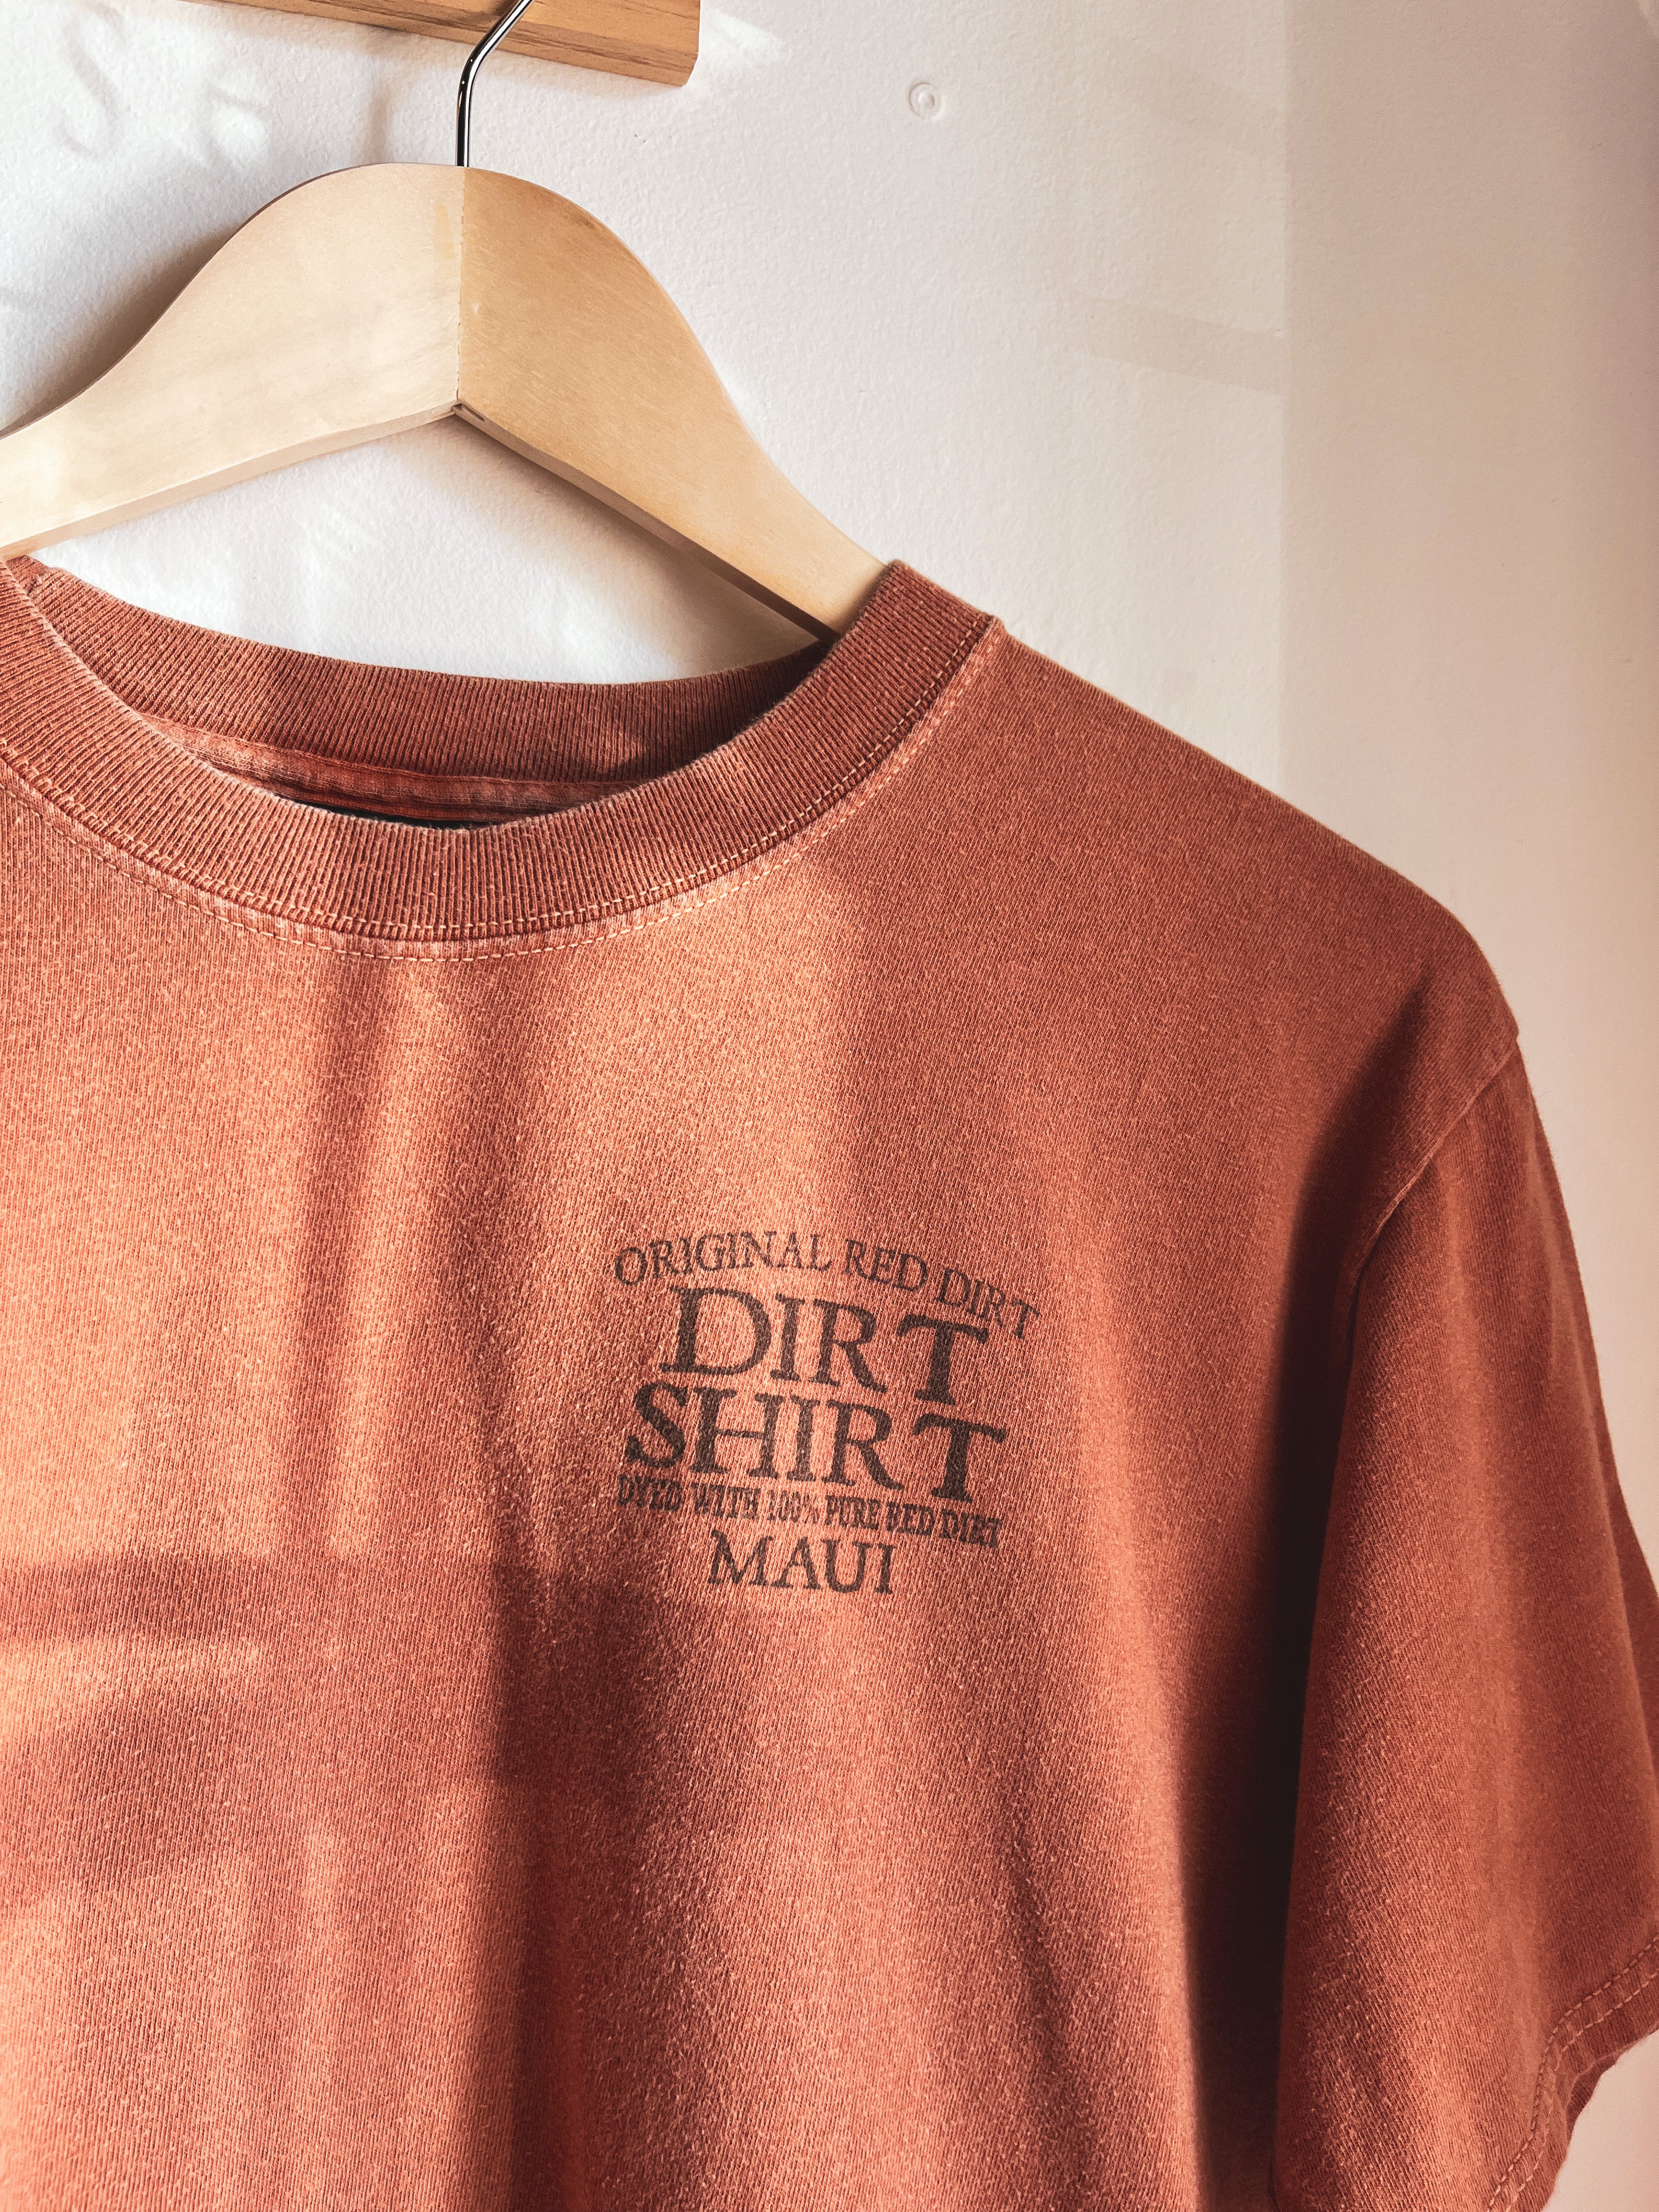 vintage red dirt Maui tee | M